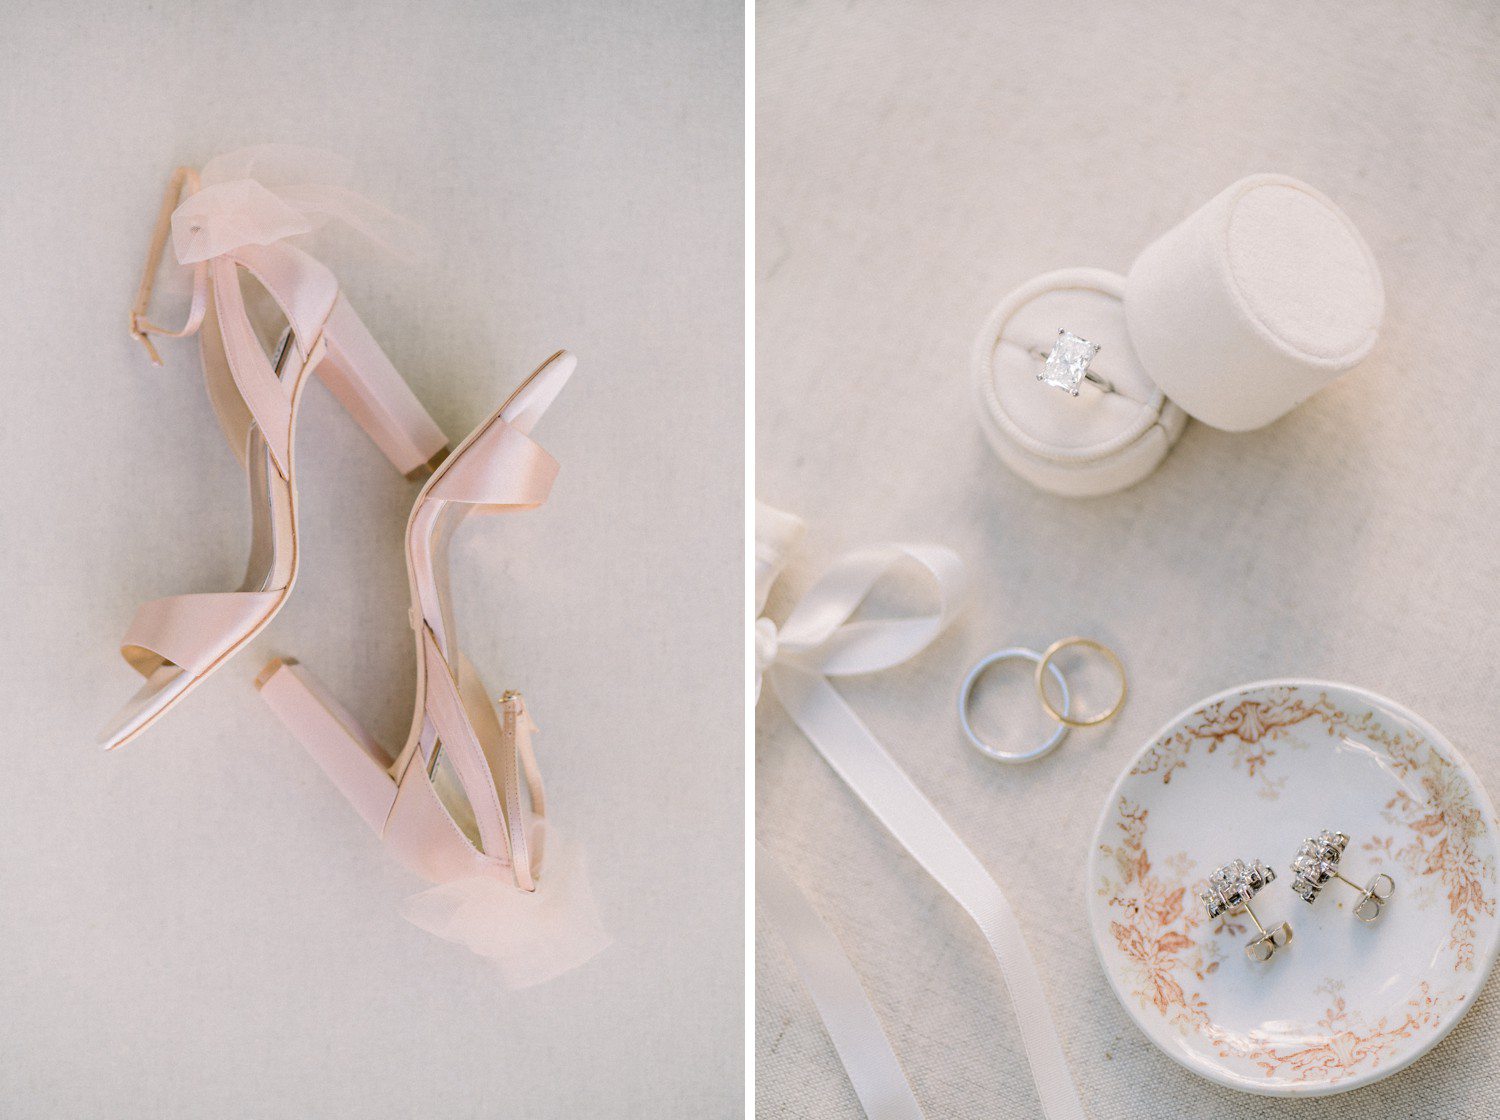 Blush Badgley Mischka Wedding Shoes and Wedding Rings